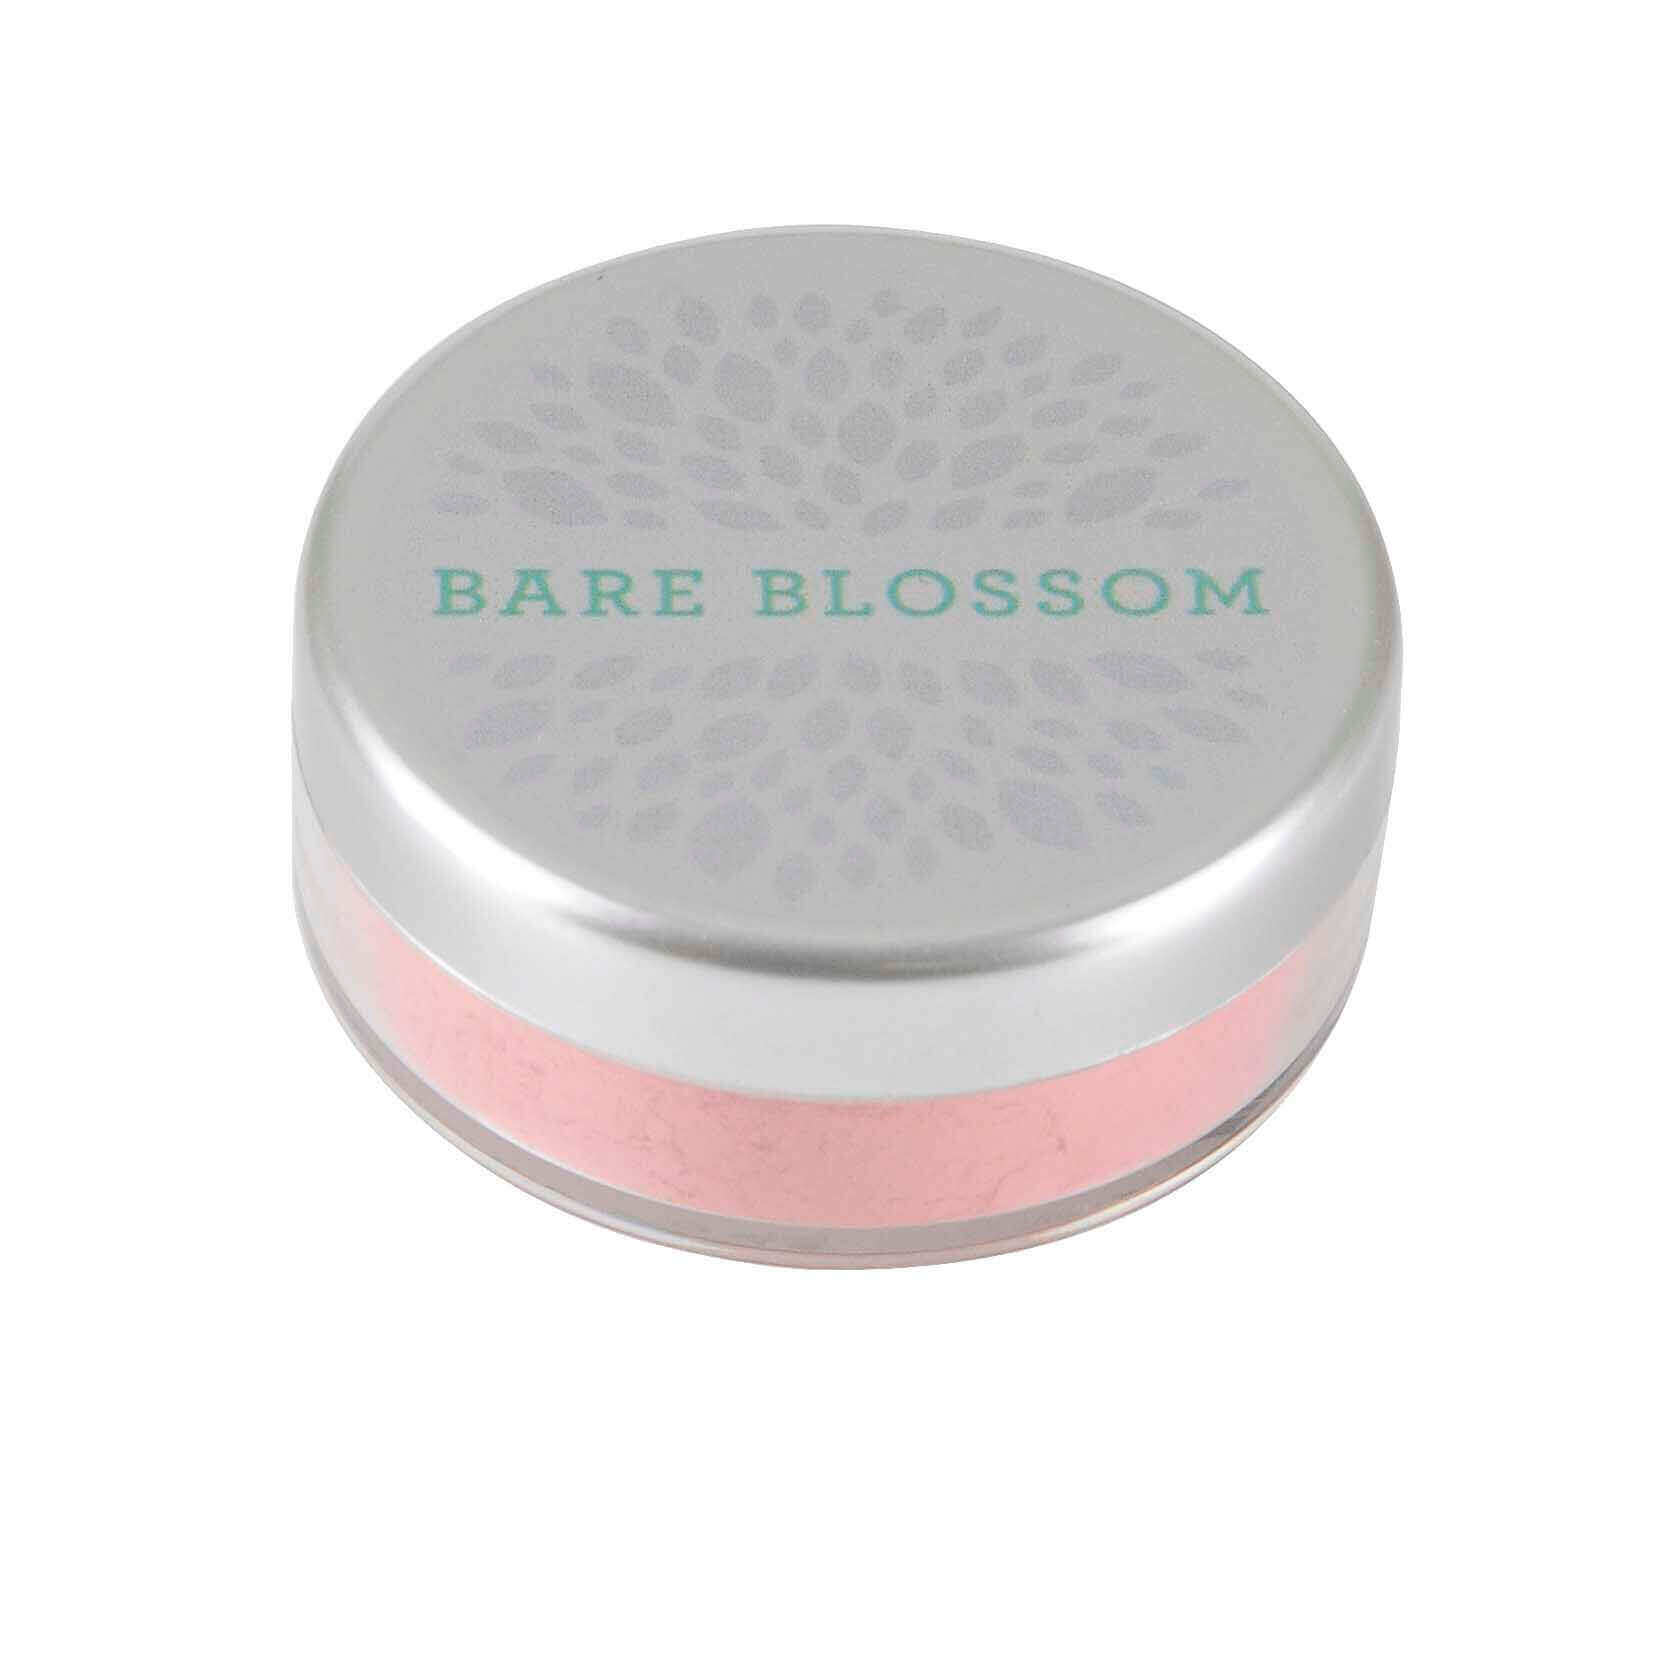 Bare Blossom long wearing formula